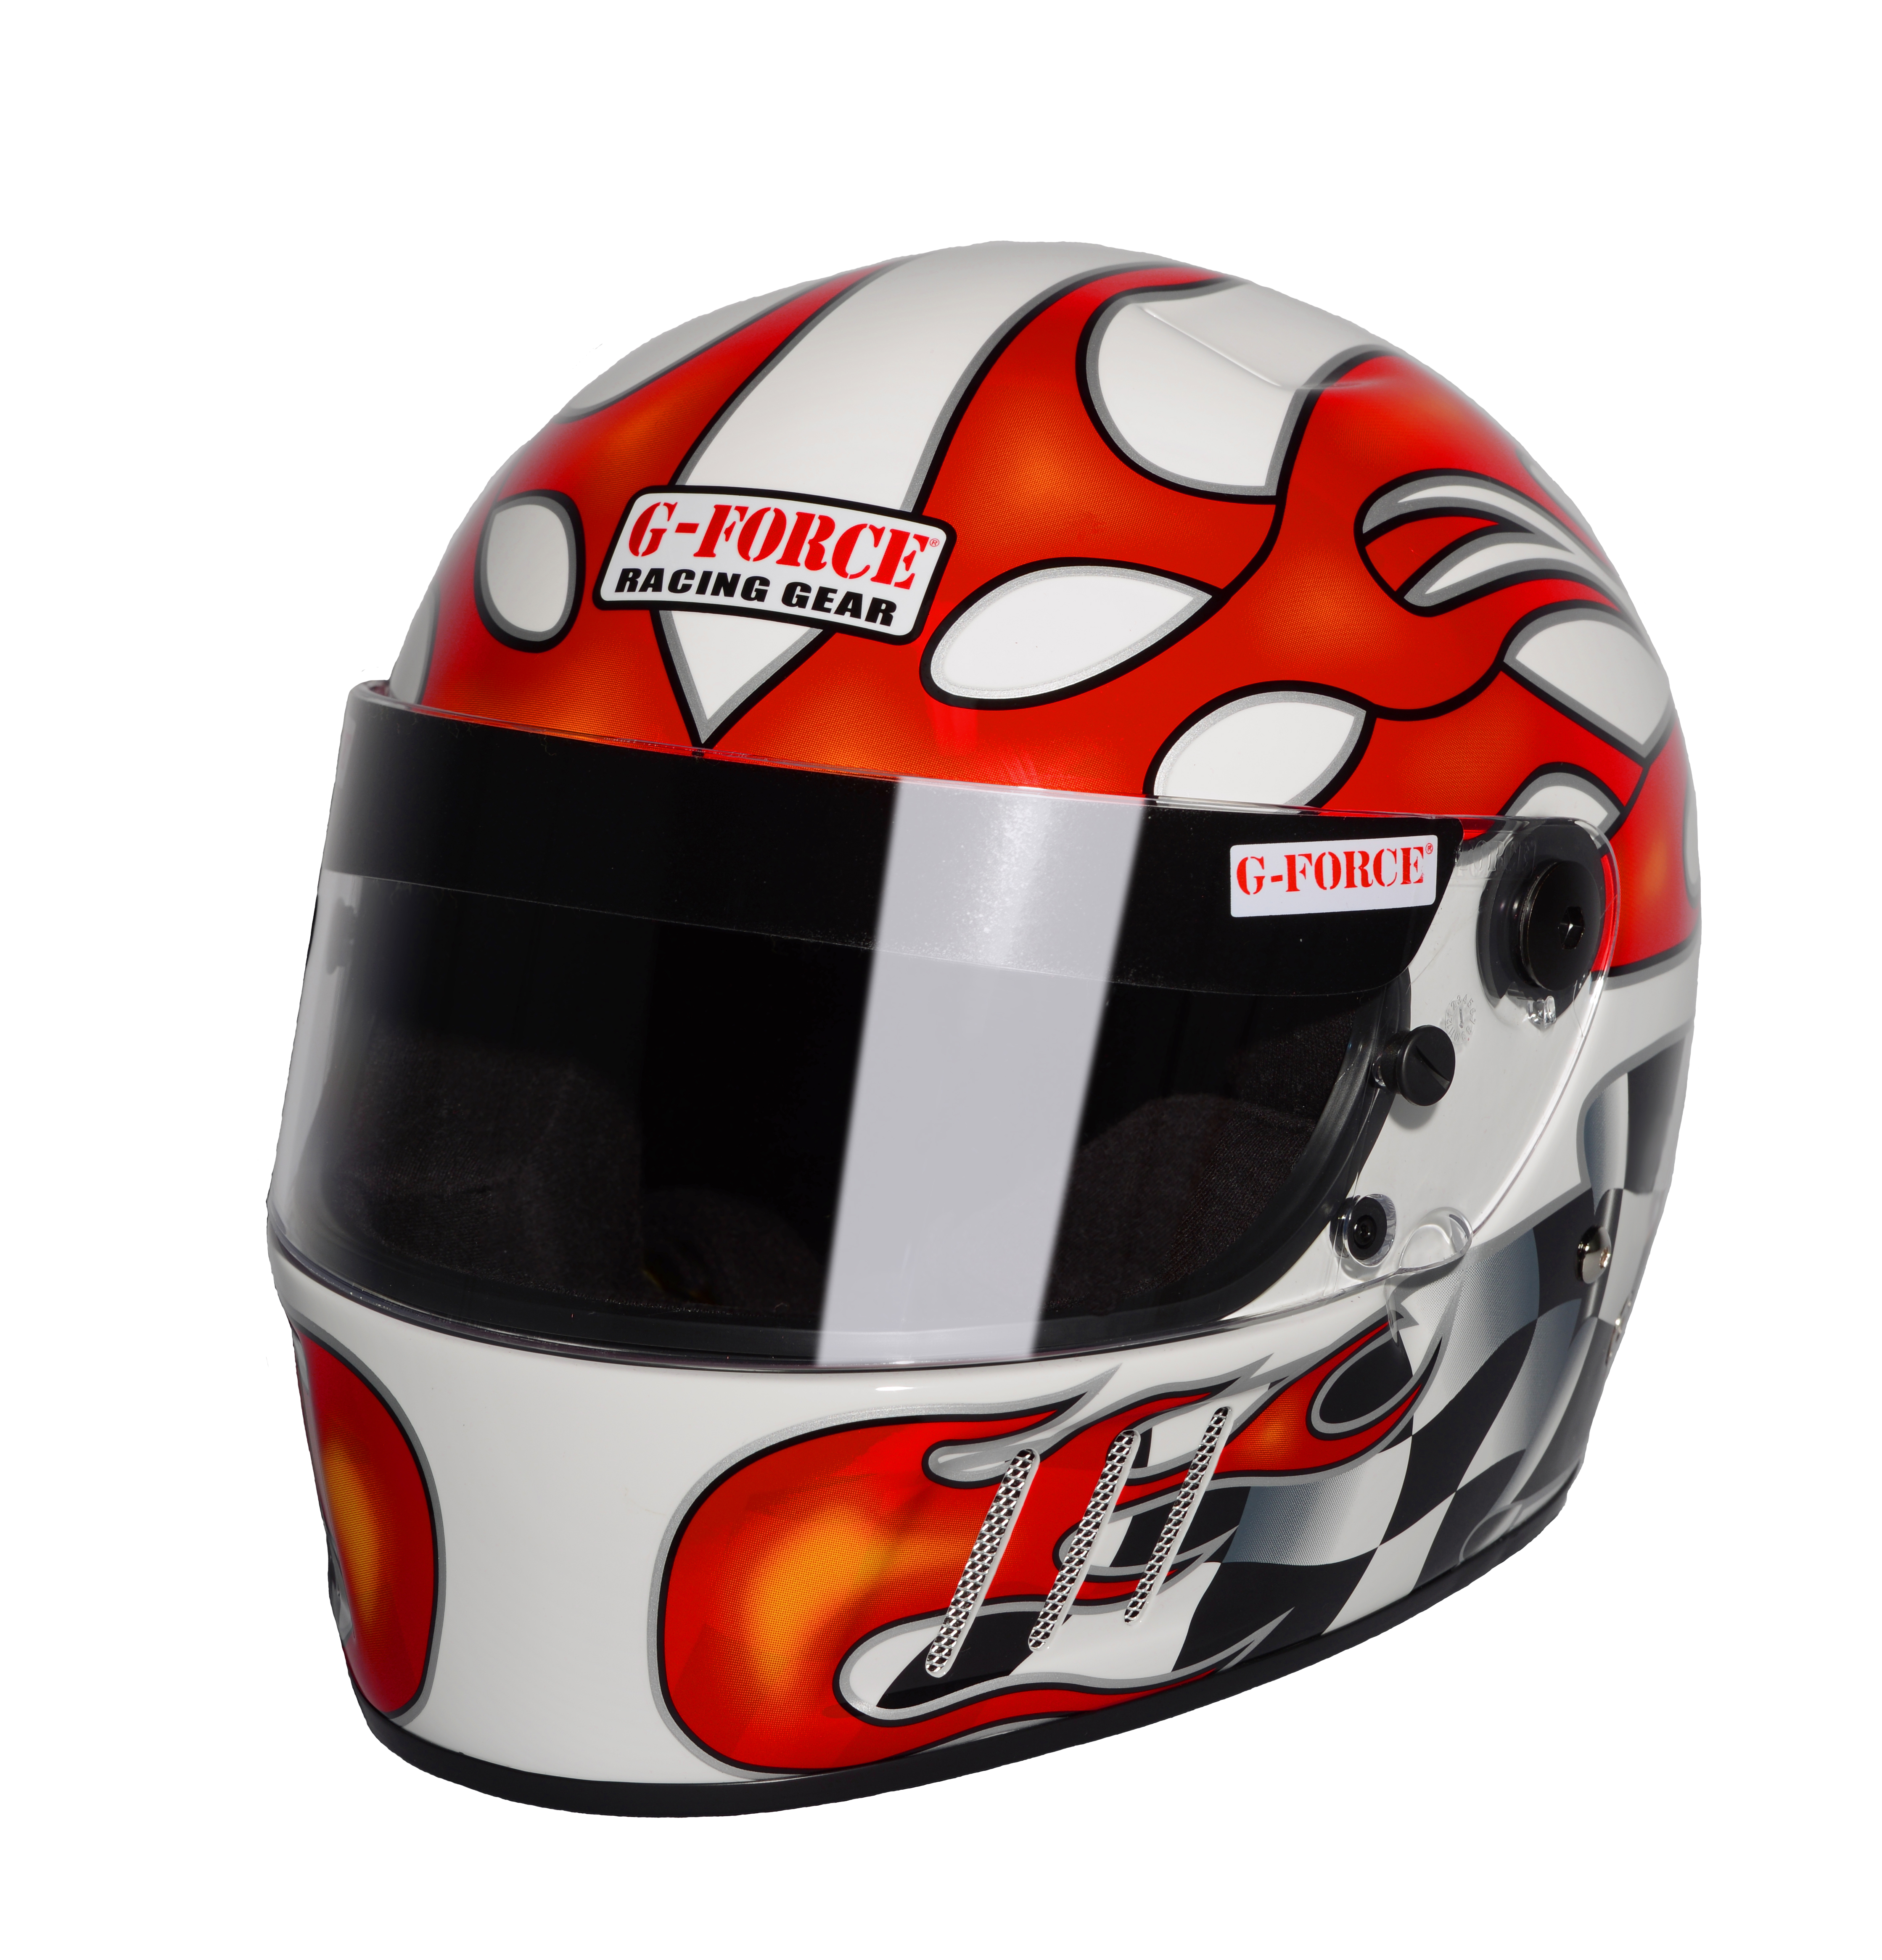 G-Force Racing Gear Helmet, PRO VINTAGE SA2010 FULL FACE MEDIUM WHITE